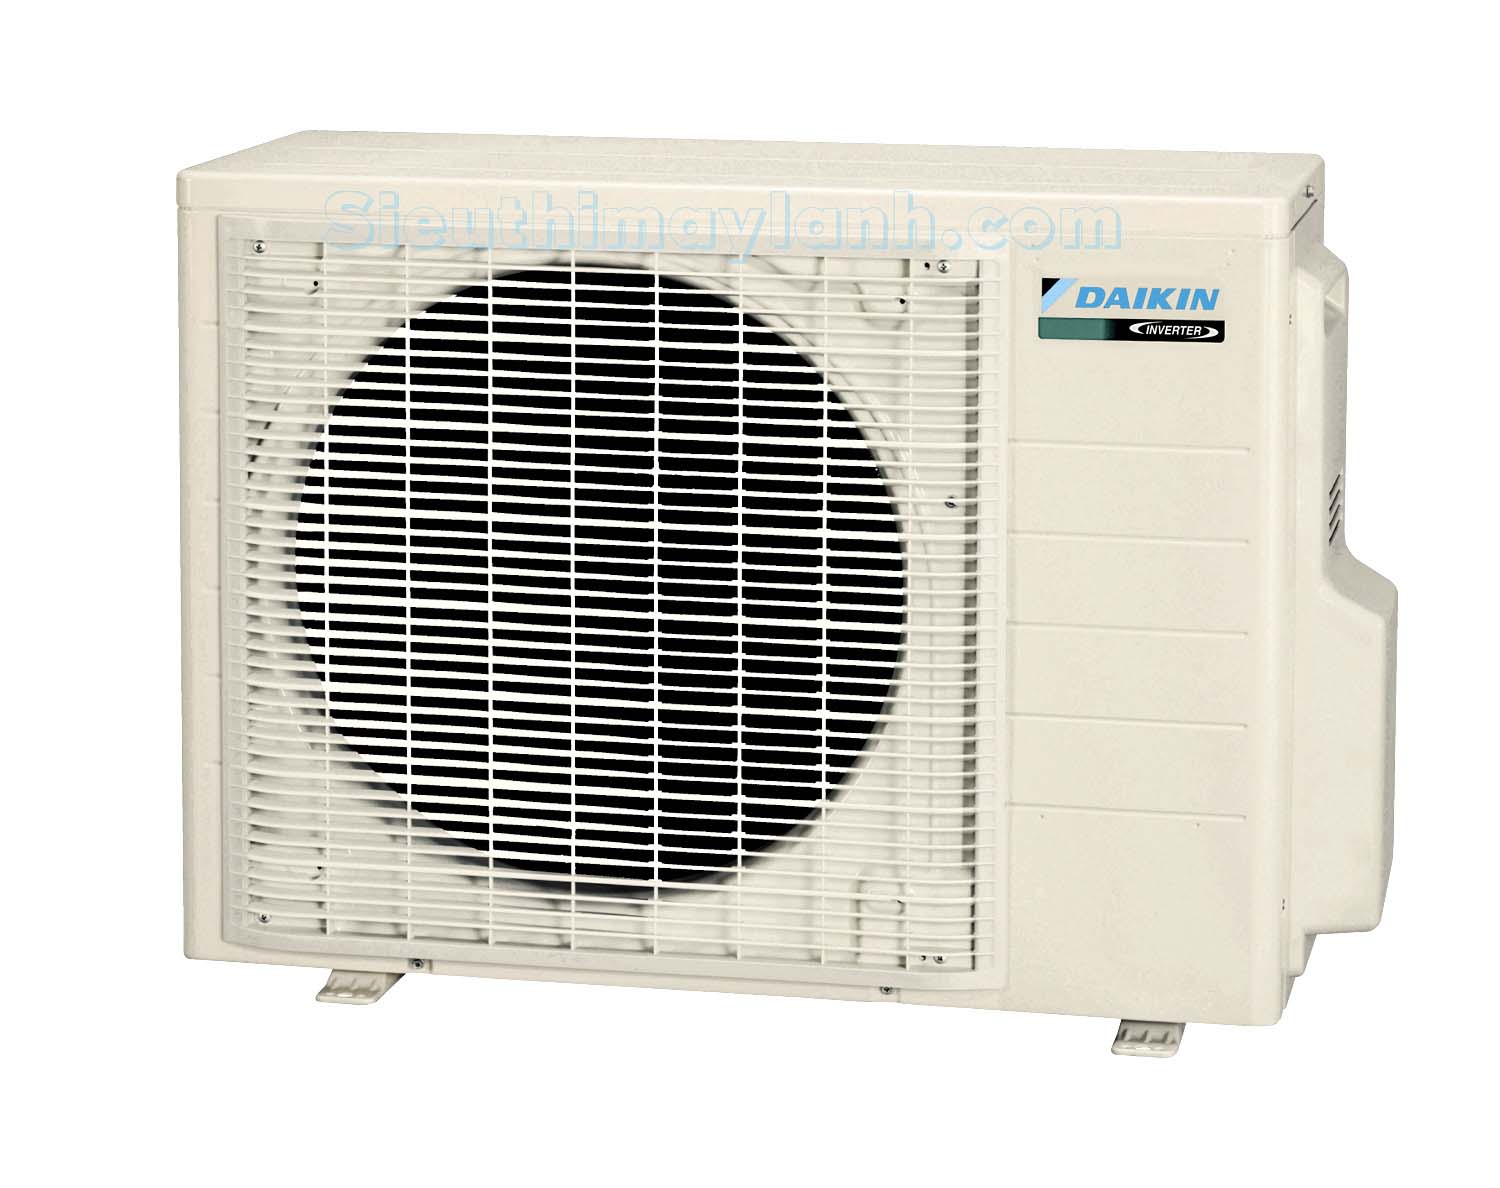 Daikin Multi air conditioning outdoor unit 4MKM68RVMV inverter (3.0Hp) - Gas R32